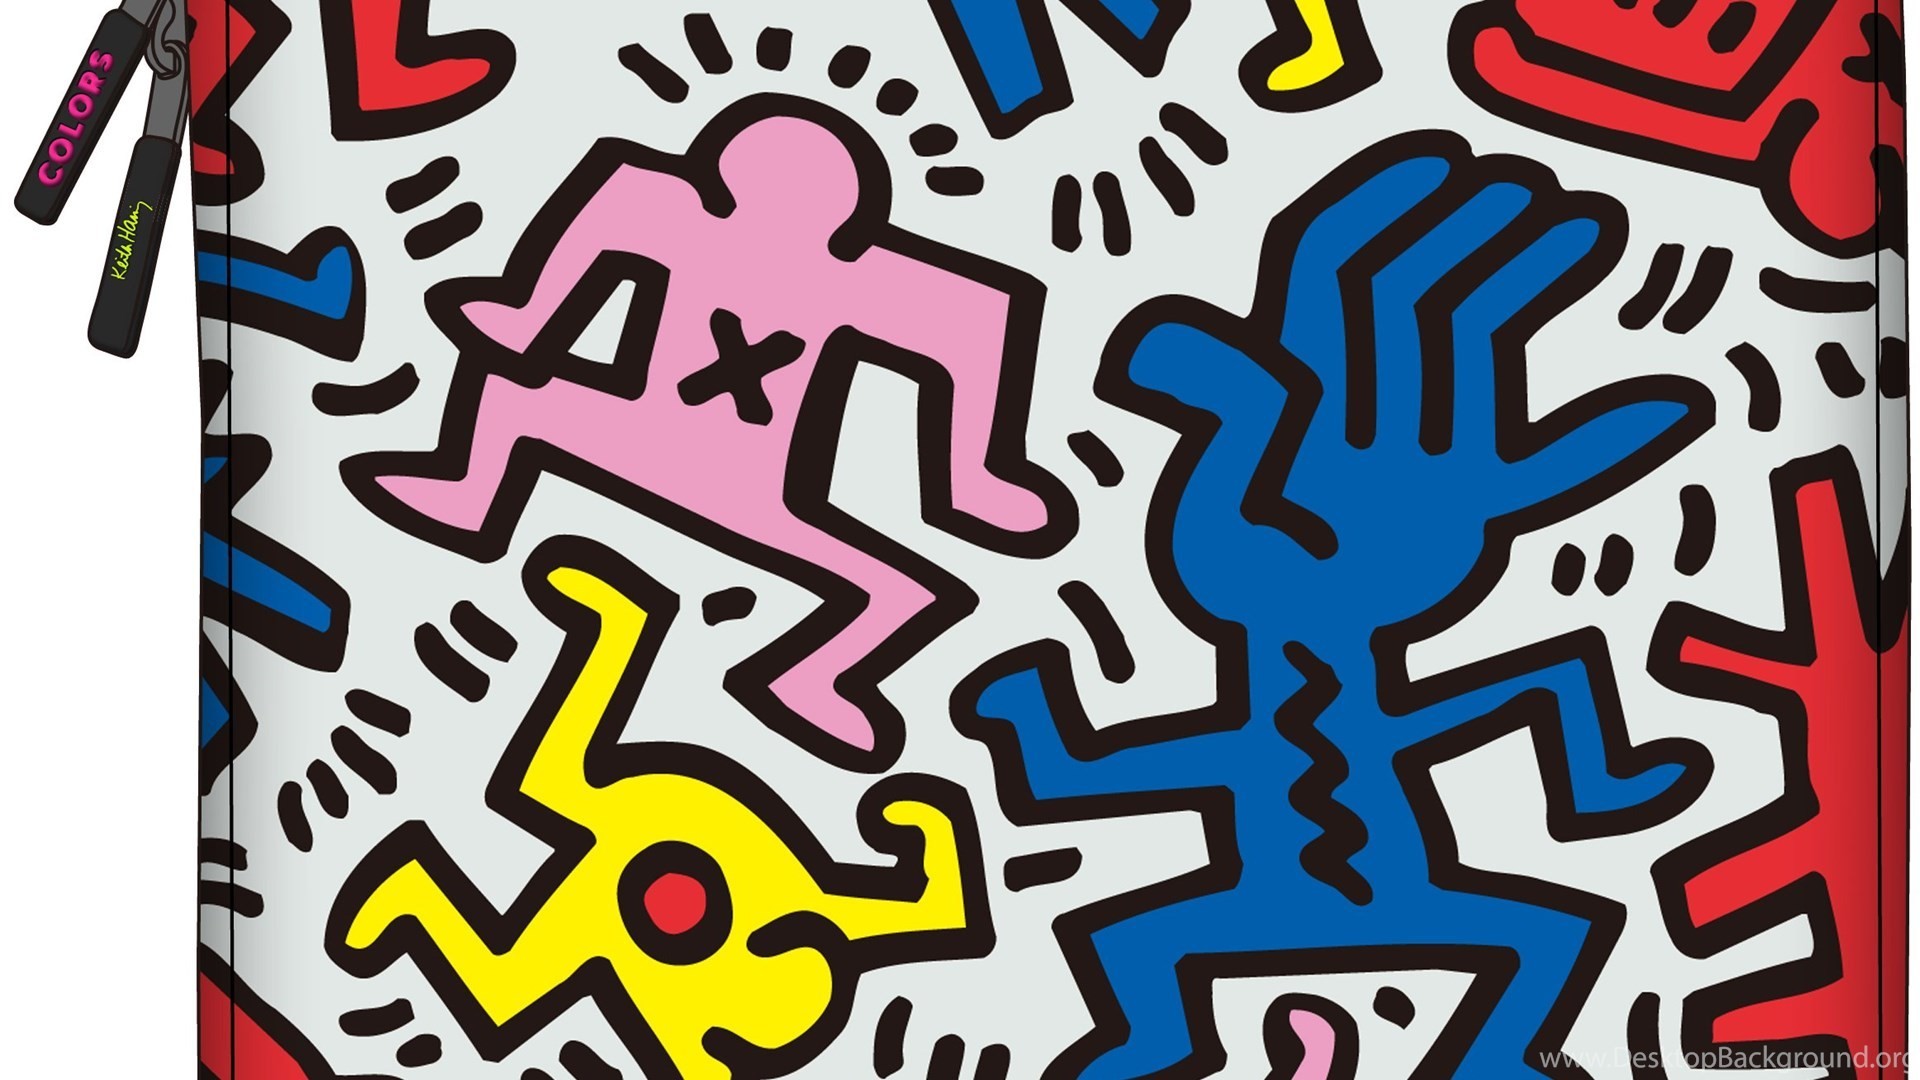 Keith Haring Wallpaper  keithharingstore